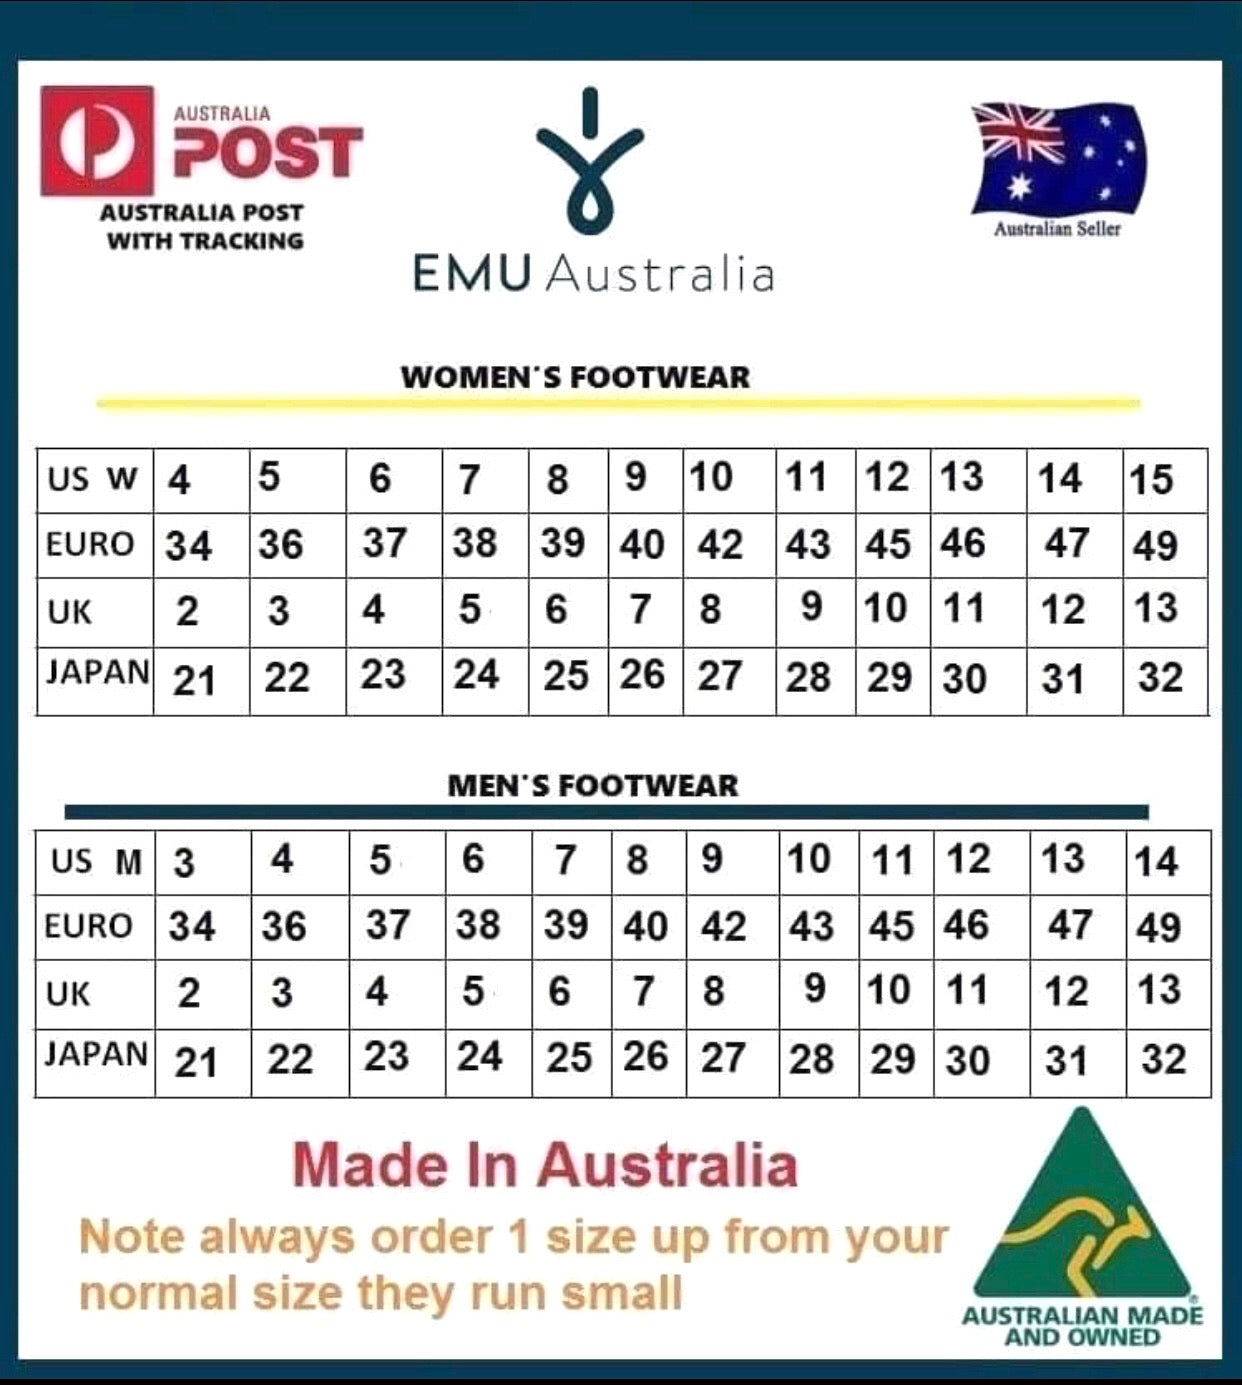 Emu Australia Chestnut Platinum Stinger Hi Knee High Sheepskin Made In Australia